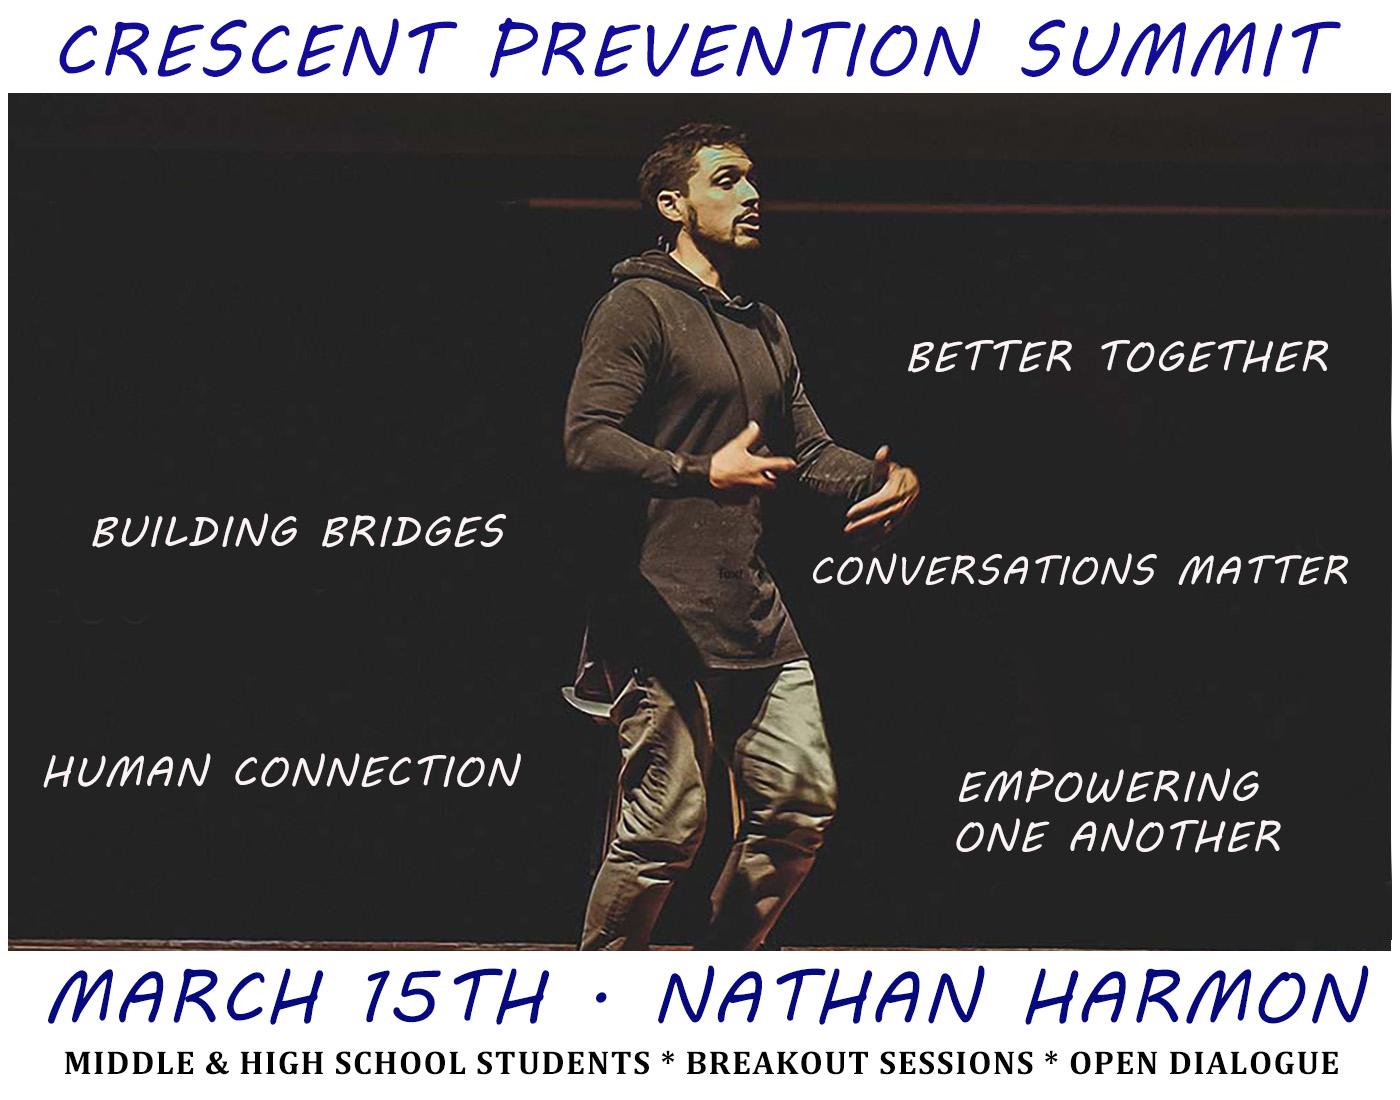 Crescent Prevention Summit March 15th 2023